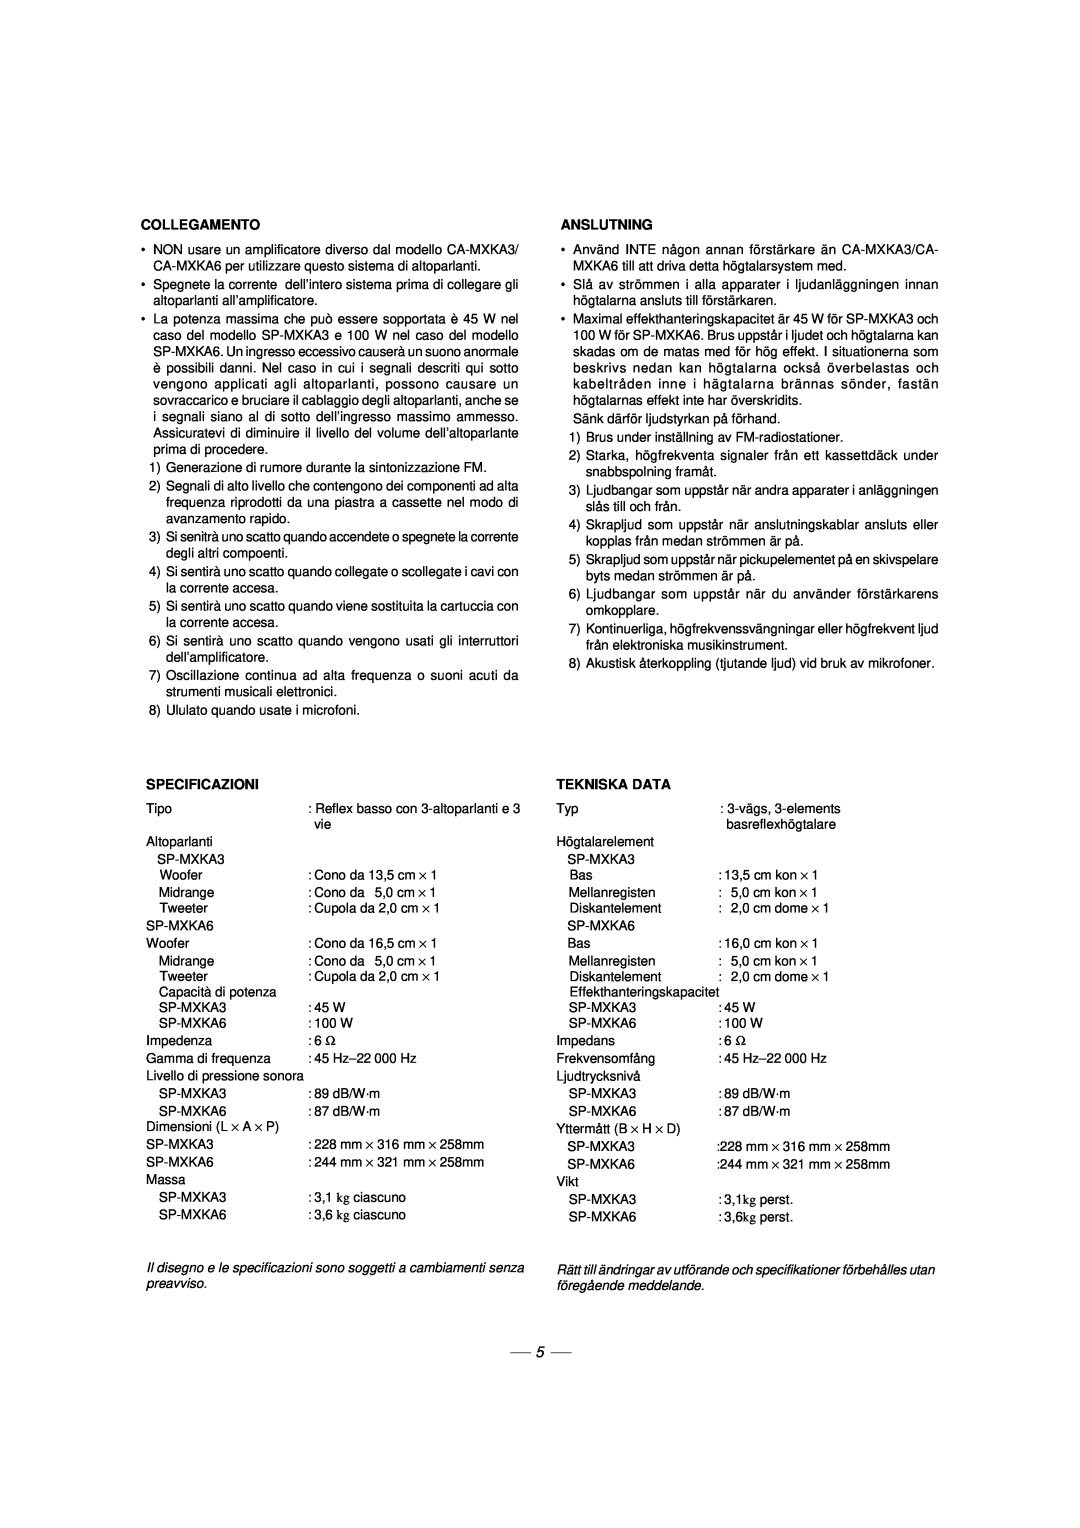 JVC 0303NYMCREBETEN, LVT1014-003A, CA-MXKA6 manual Collegamento, Anslutning, Specificazioni, Tekniska Data 